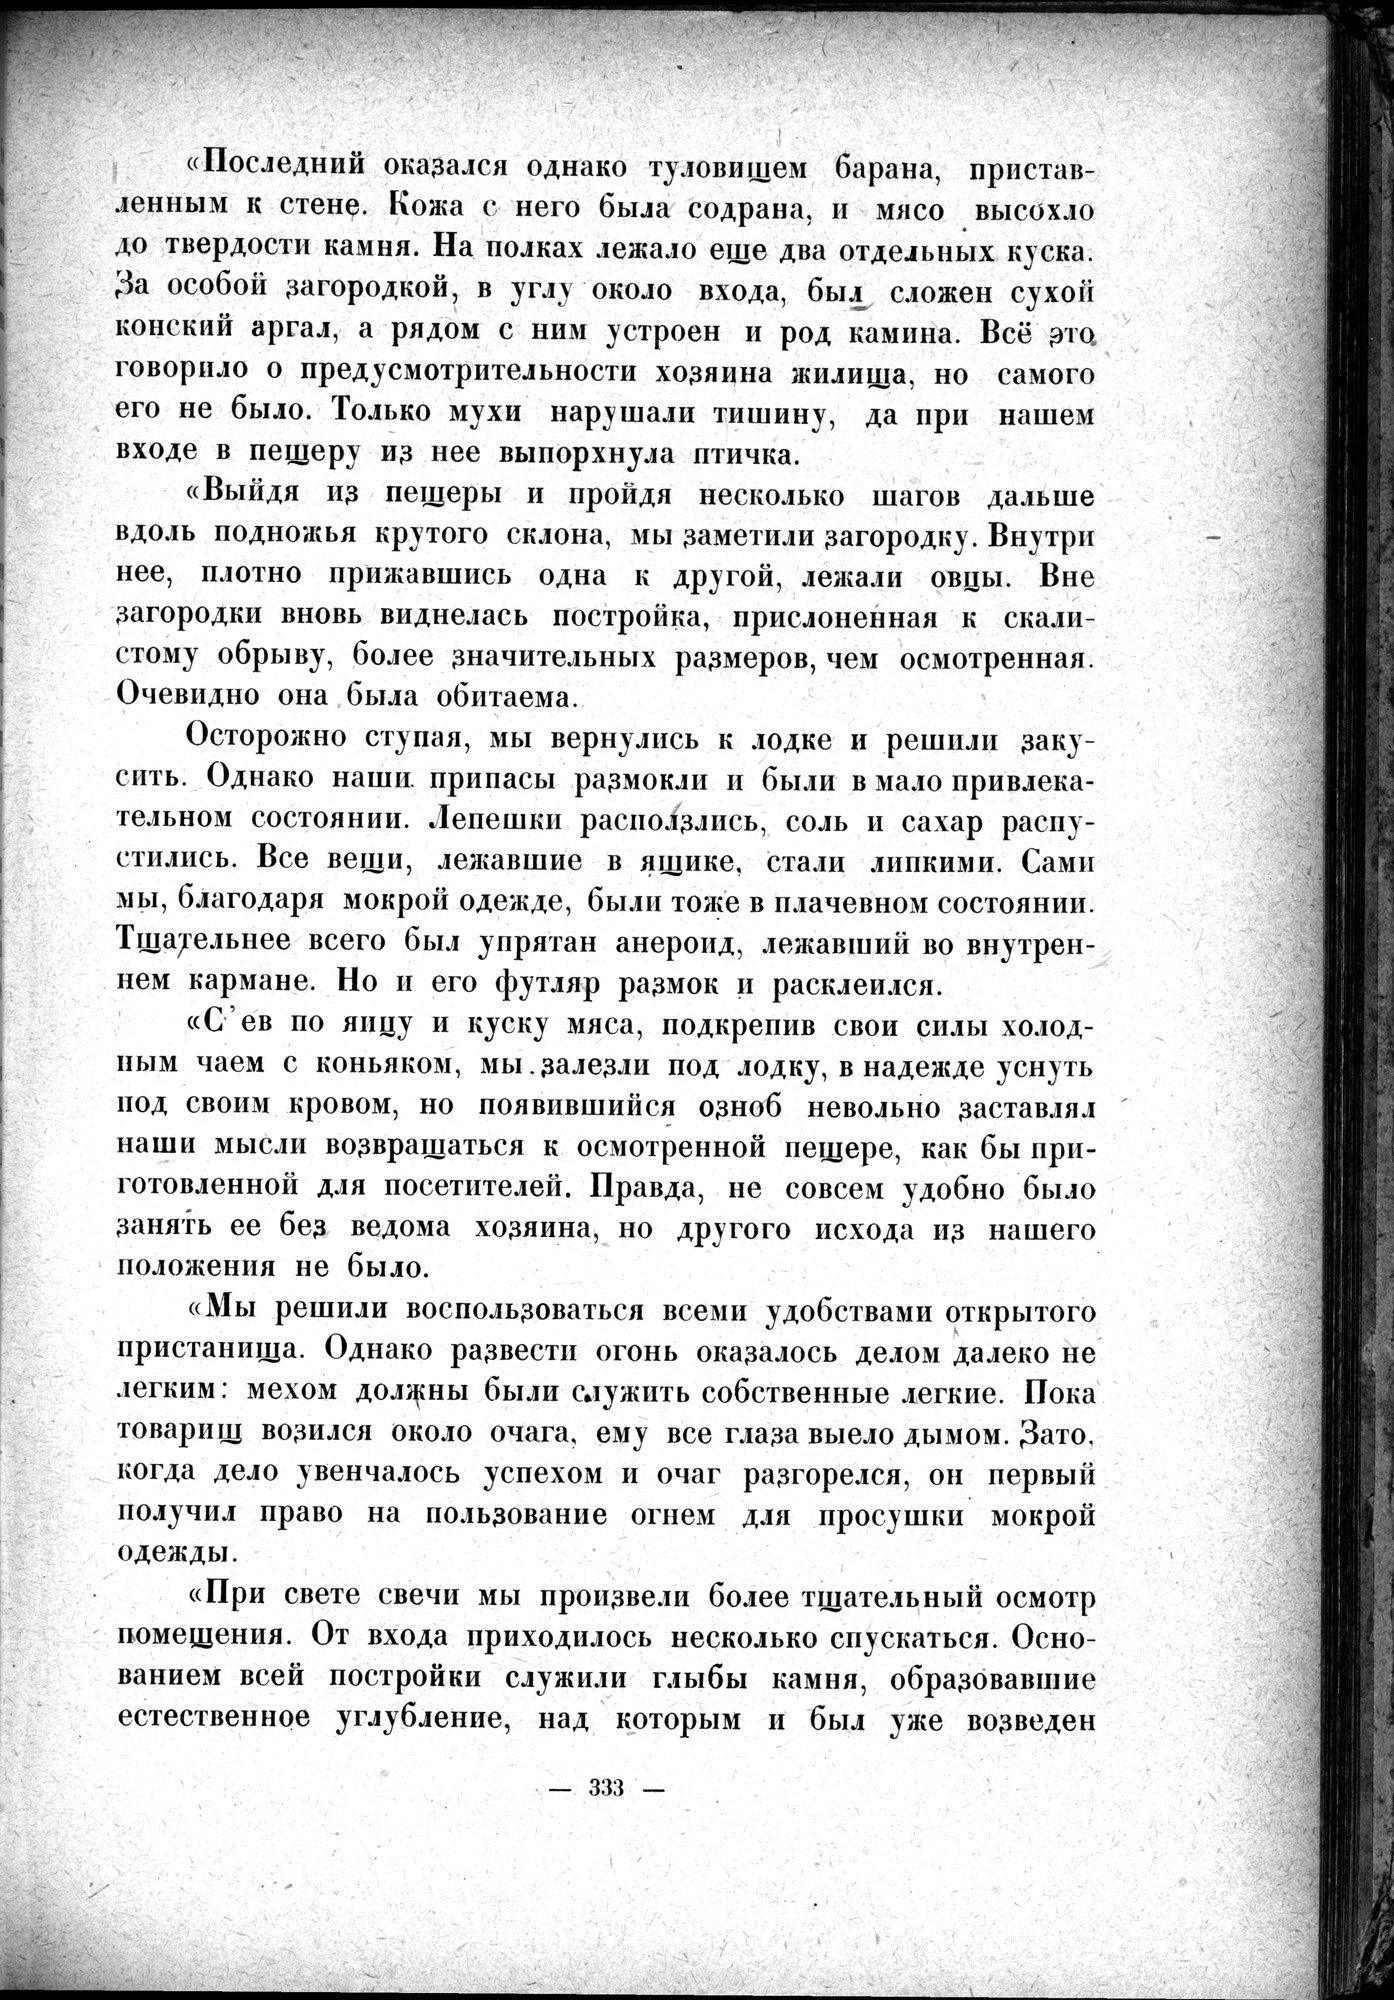 Mongoliya i Amdo i mertby gorod Khara-Khoto : vol.1 / Page 383 (Grayscale High Resolution Image)